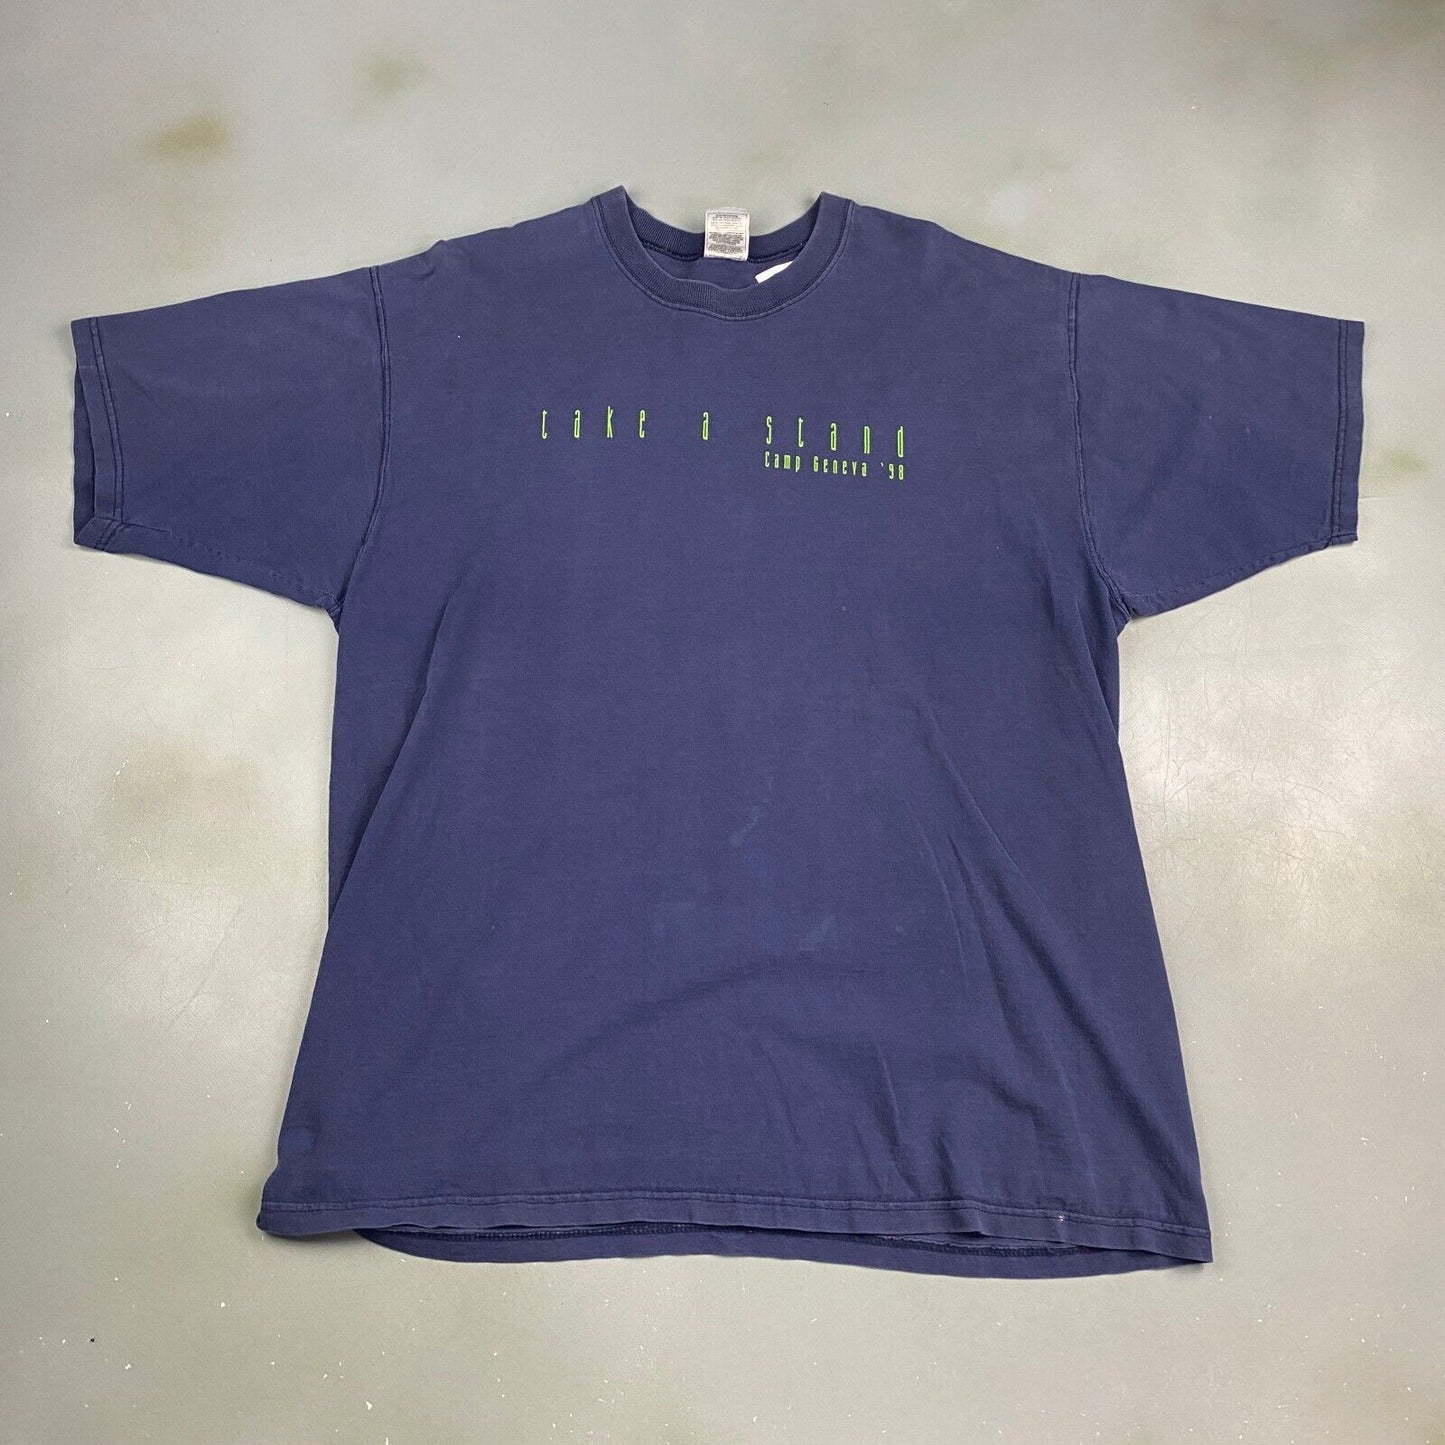 VINTAGE 1998 Take A Stand Camp Geneva Navy T-Shirt sz XL Adult